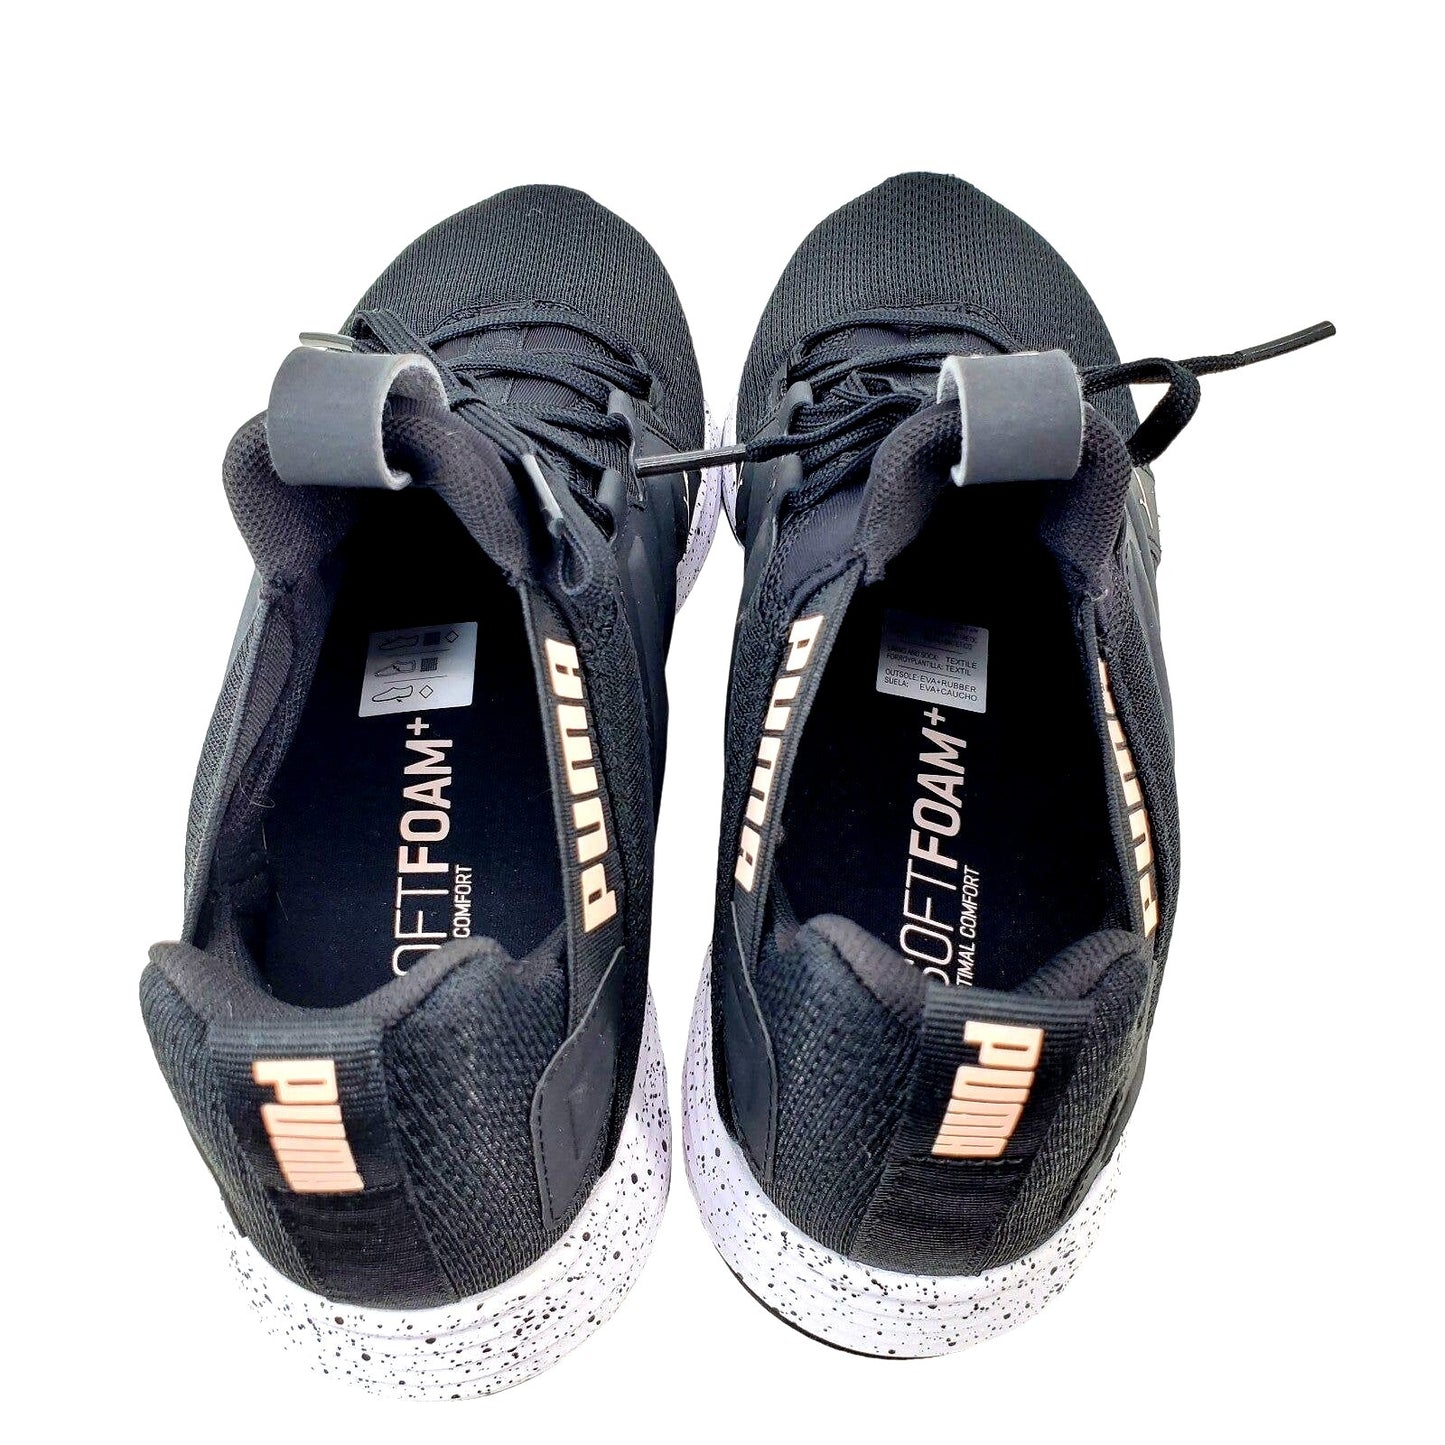 PUMA Sneakers Woman's Slip-on Contempt Demi Activewear Shoes